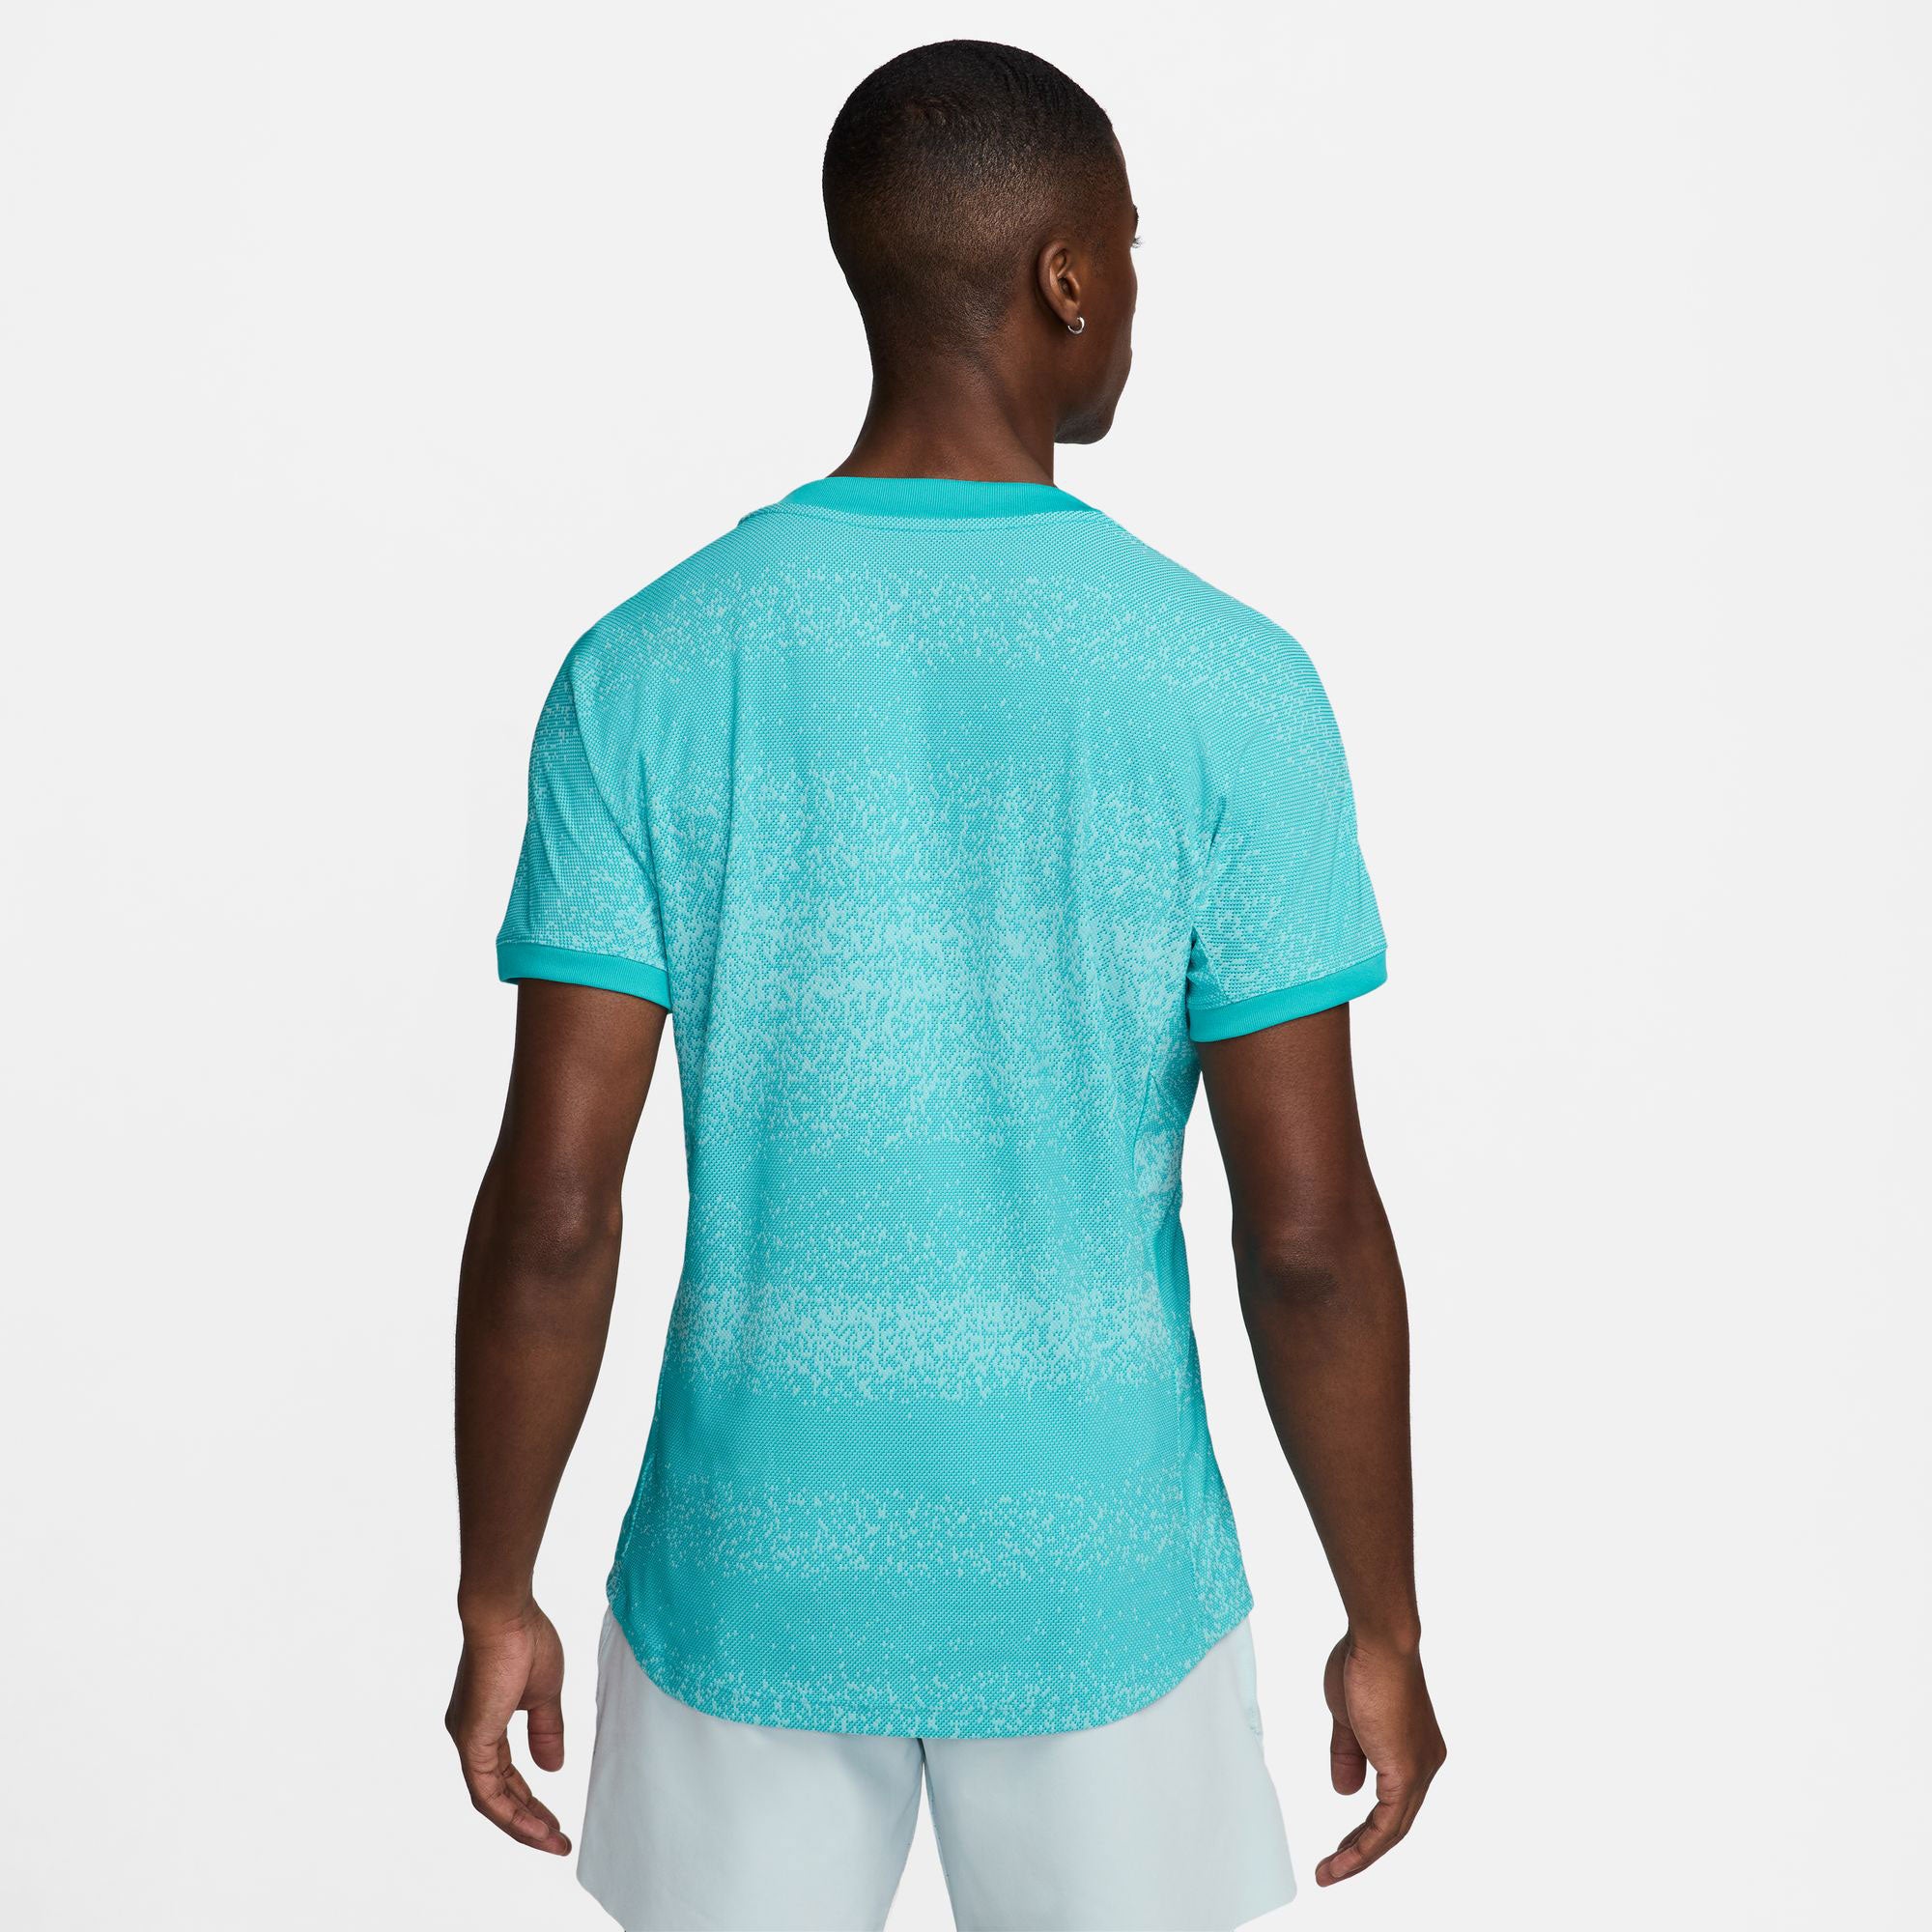 Nike Rafa Men's Dri-FIT ADV Tennis Shirt - Green (2)